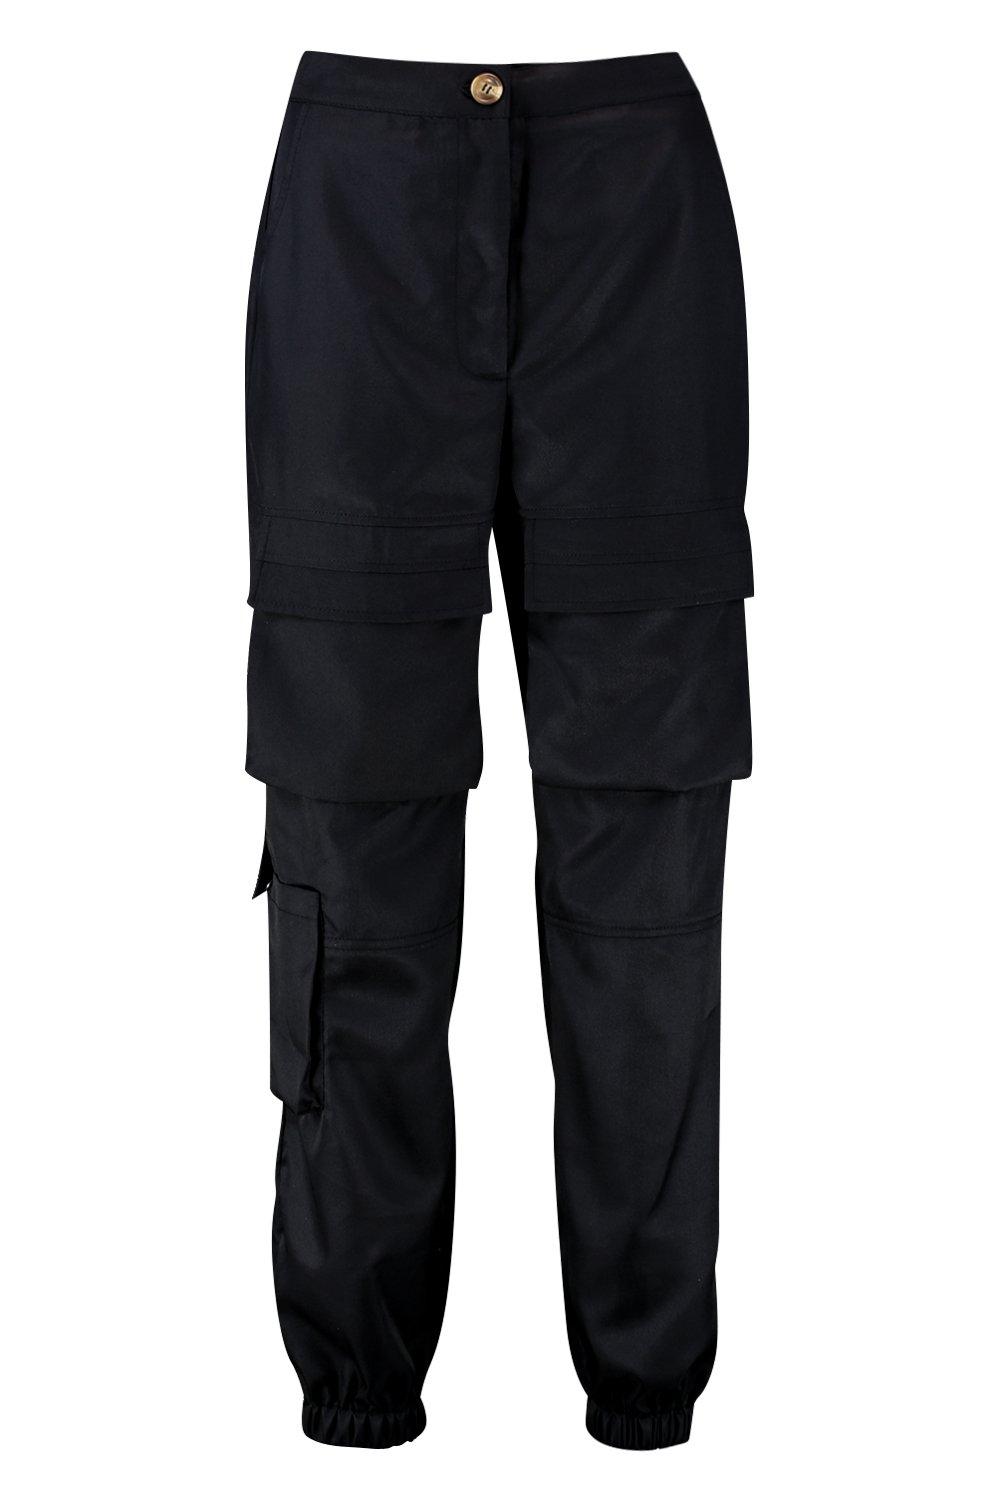 Petite Black Pocket Detail Cargo Pant